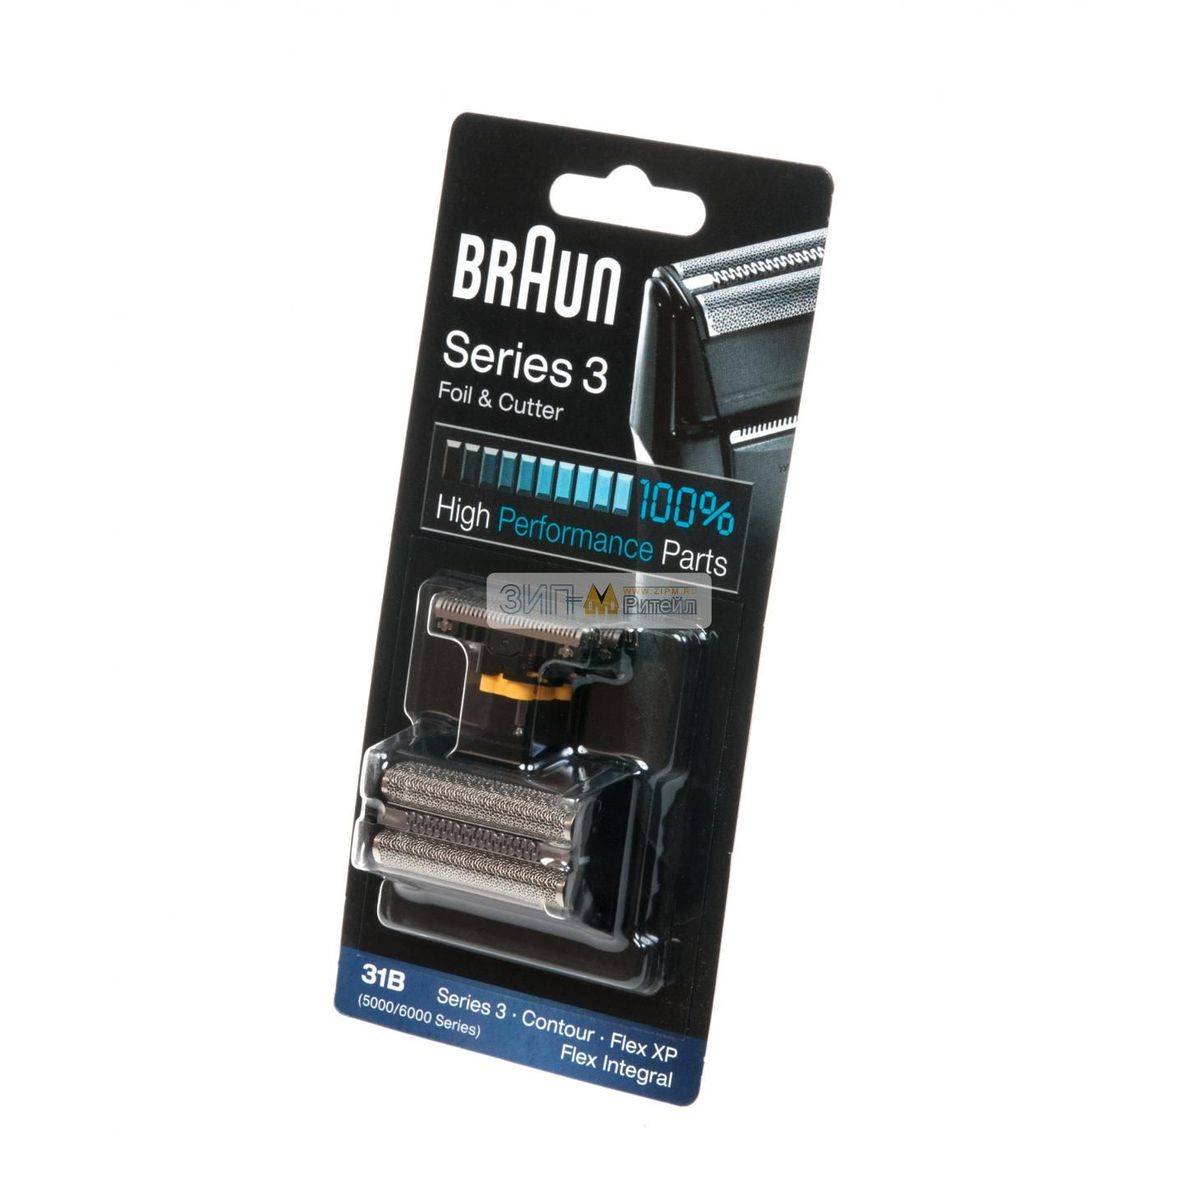 Сетка и нож бритвы 31B для электрической бритвы Braun (Браун)